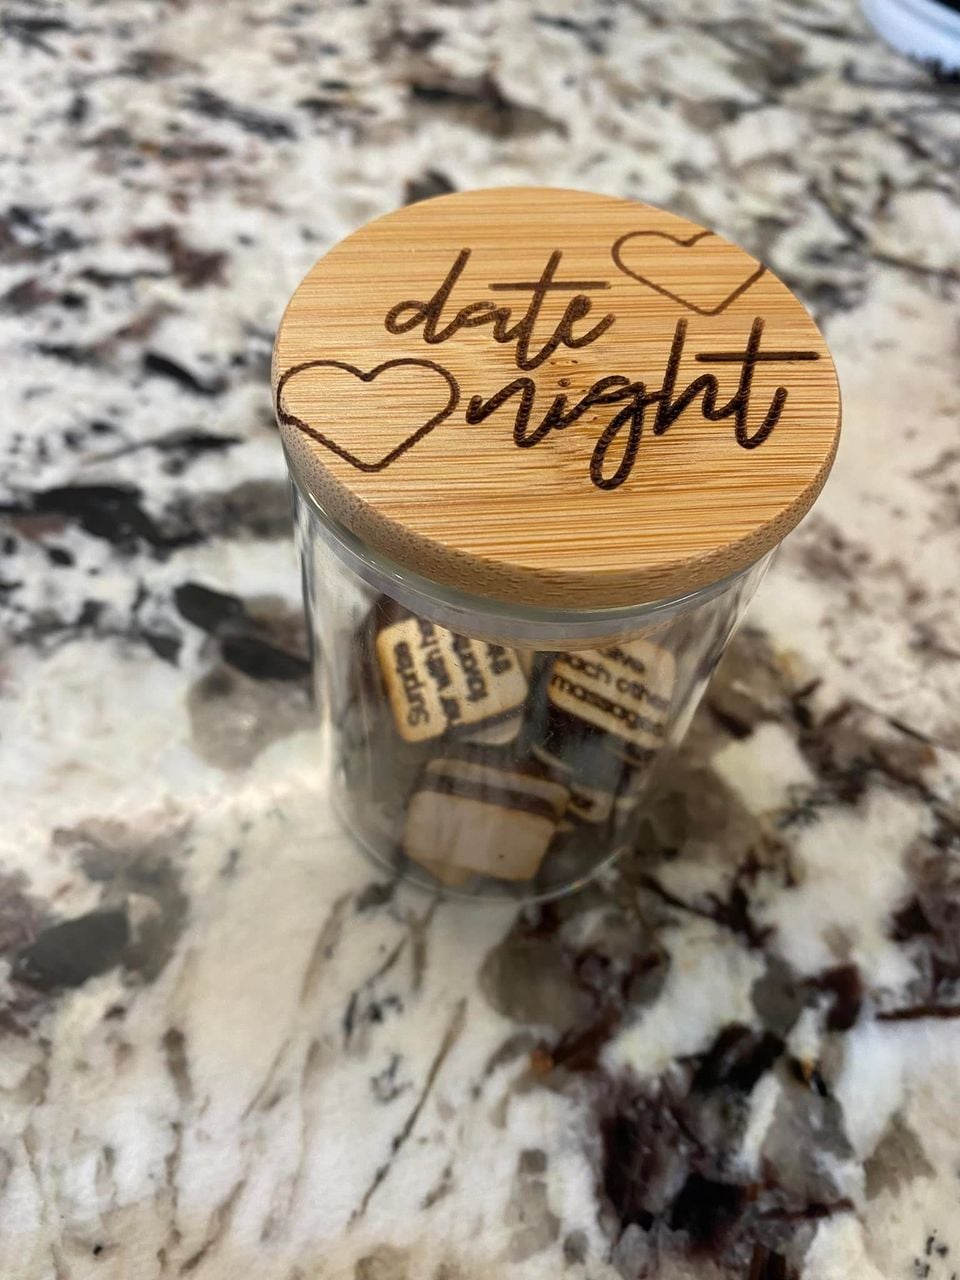 Date Night Jar